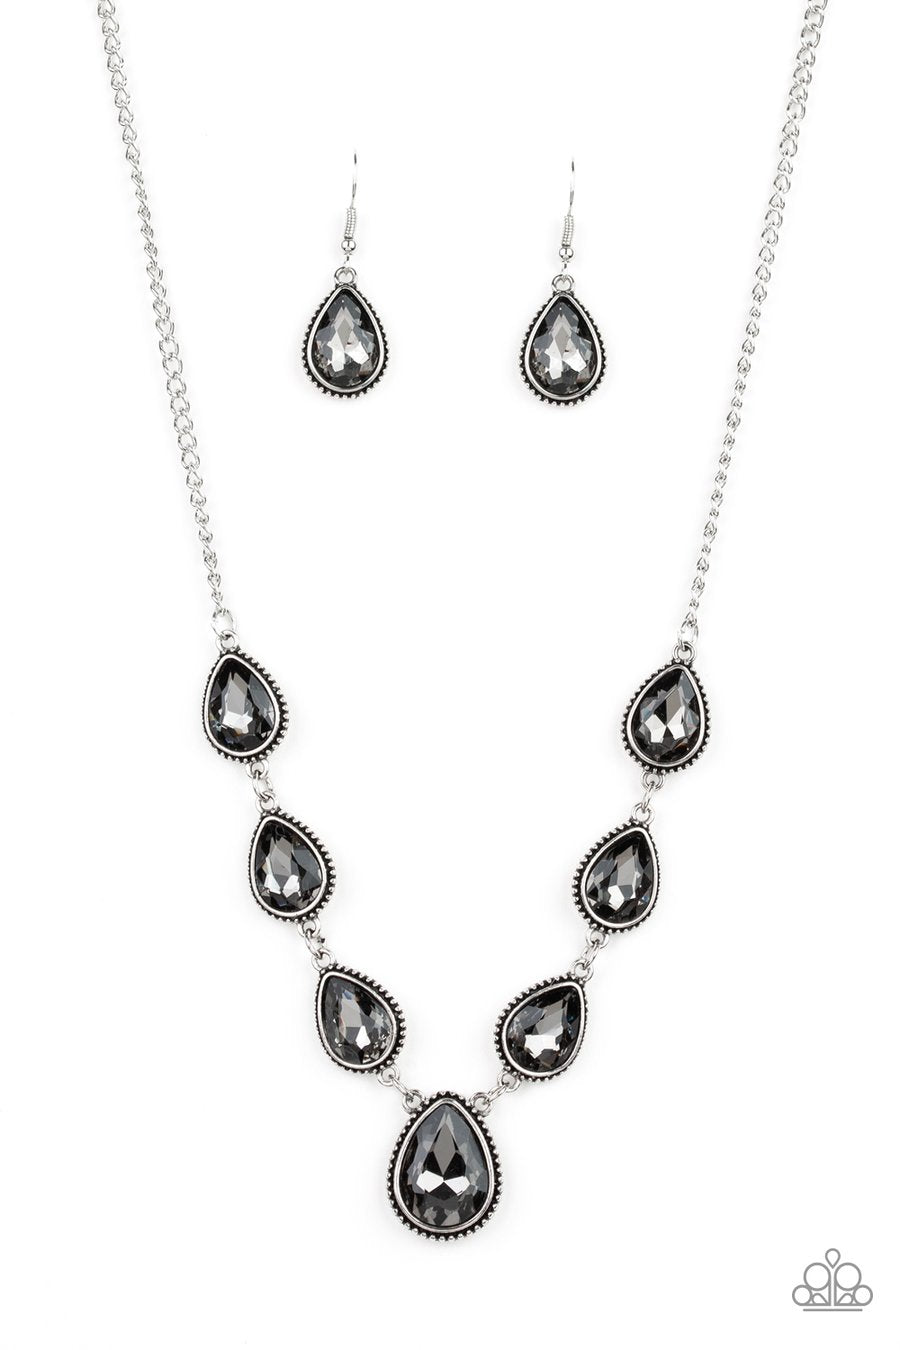 Paparazzi Accessories Socialite Social - Silver Necklaces - Lady T Accessories